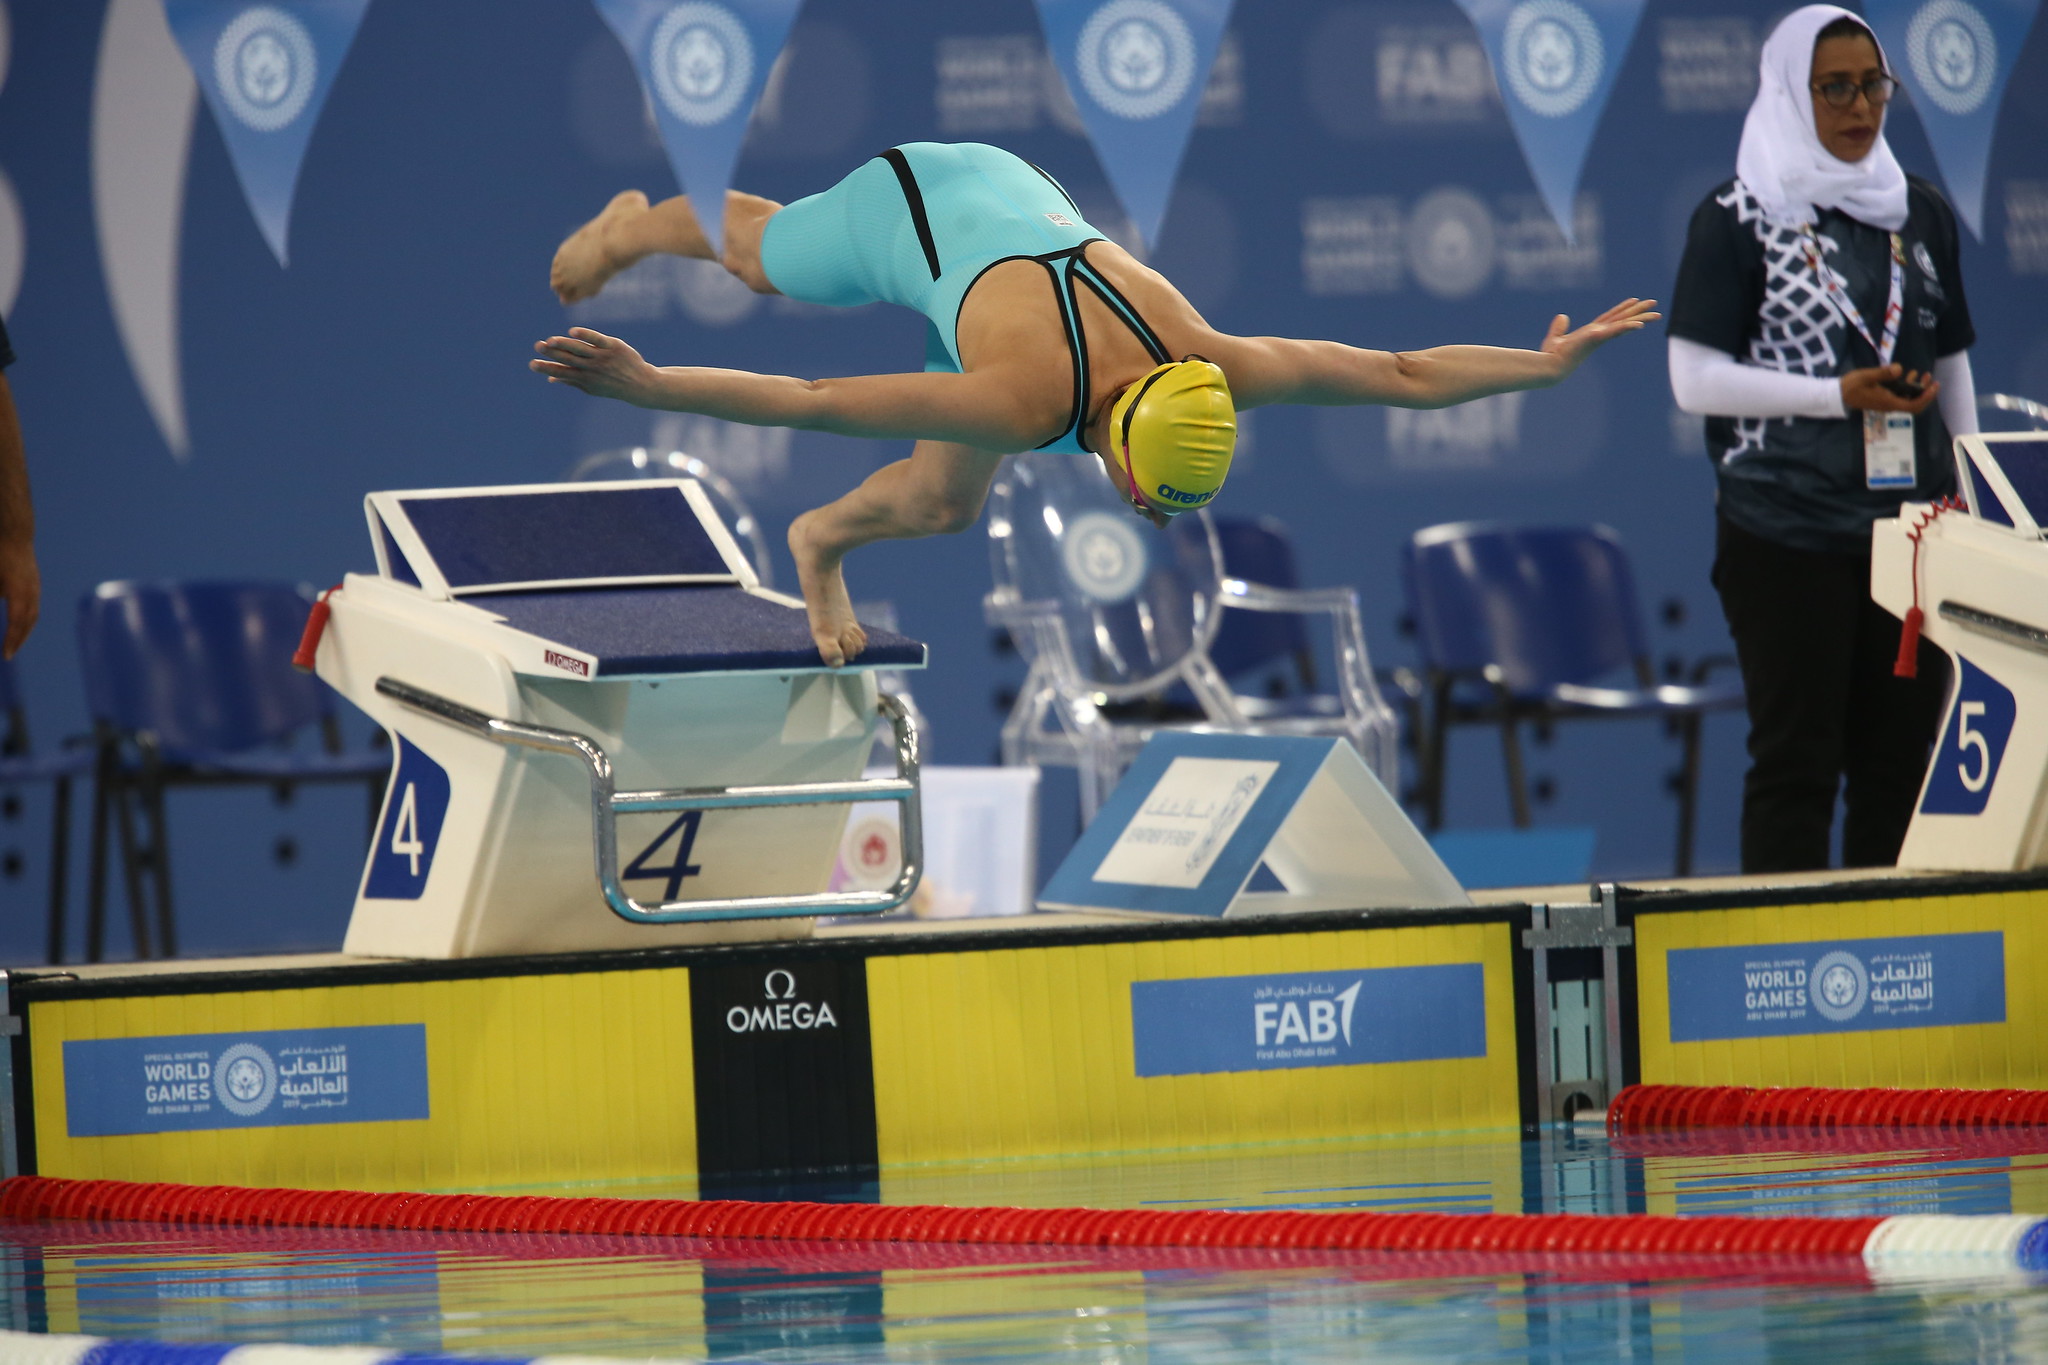 Simning, Special Olympics World Summer Games Abu Dhabi 2019